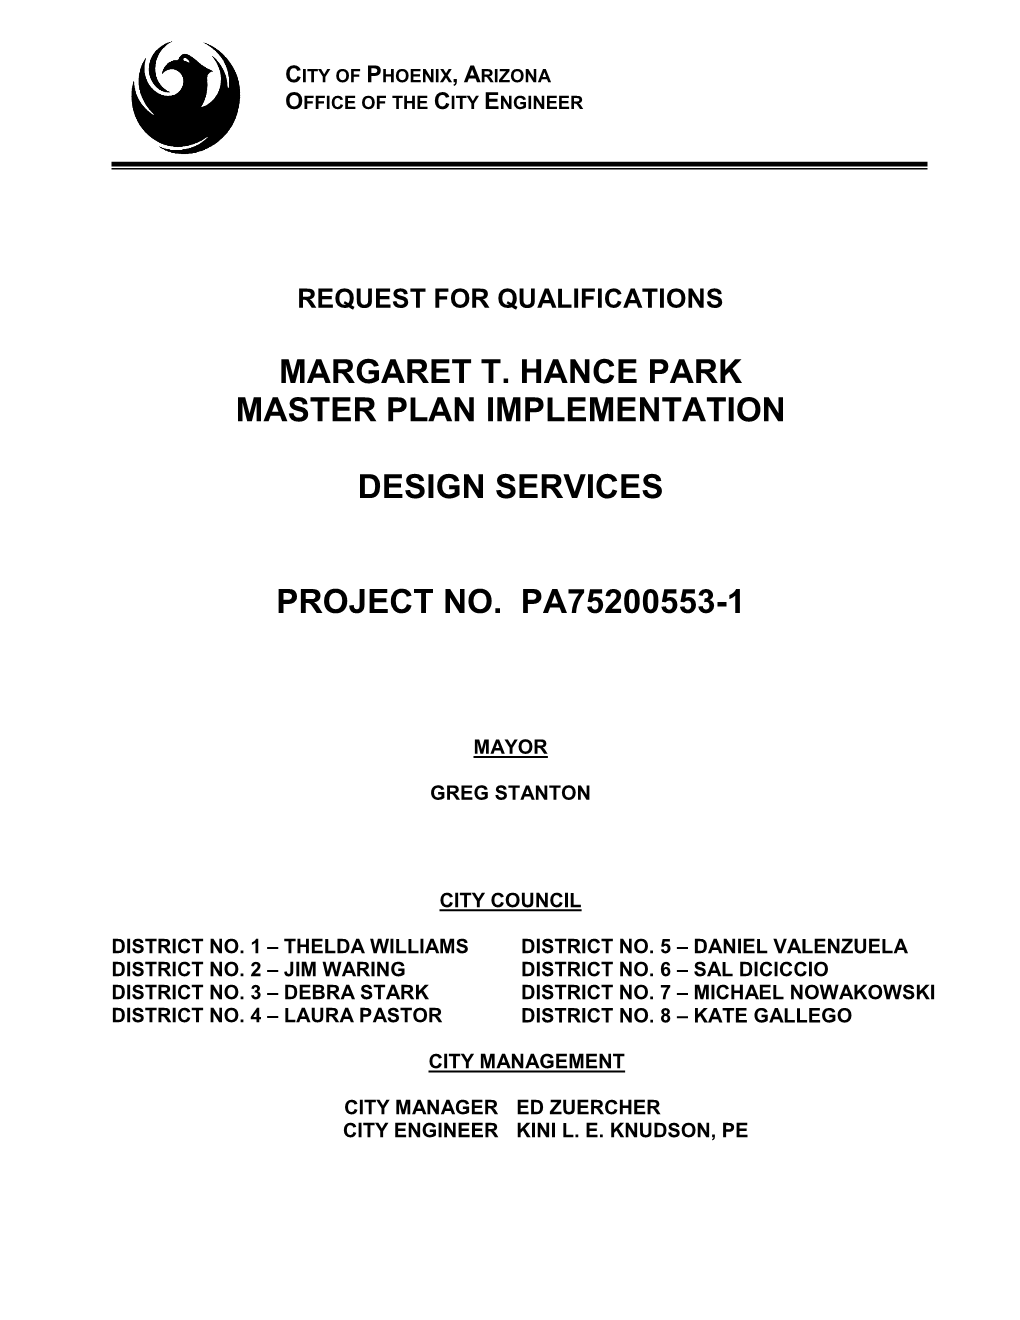 Margaret T. Hance Park Master Plan Implementation